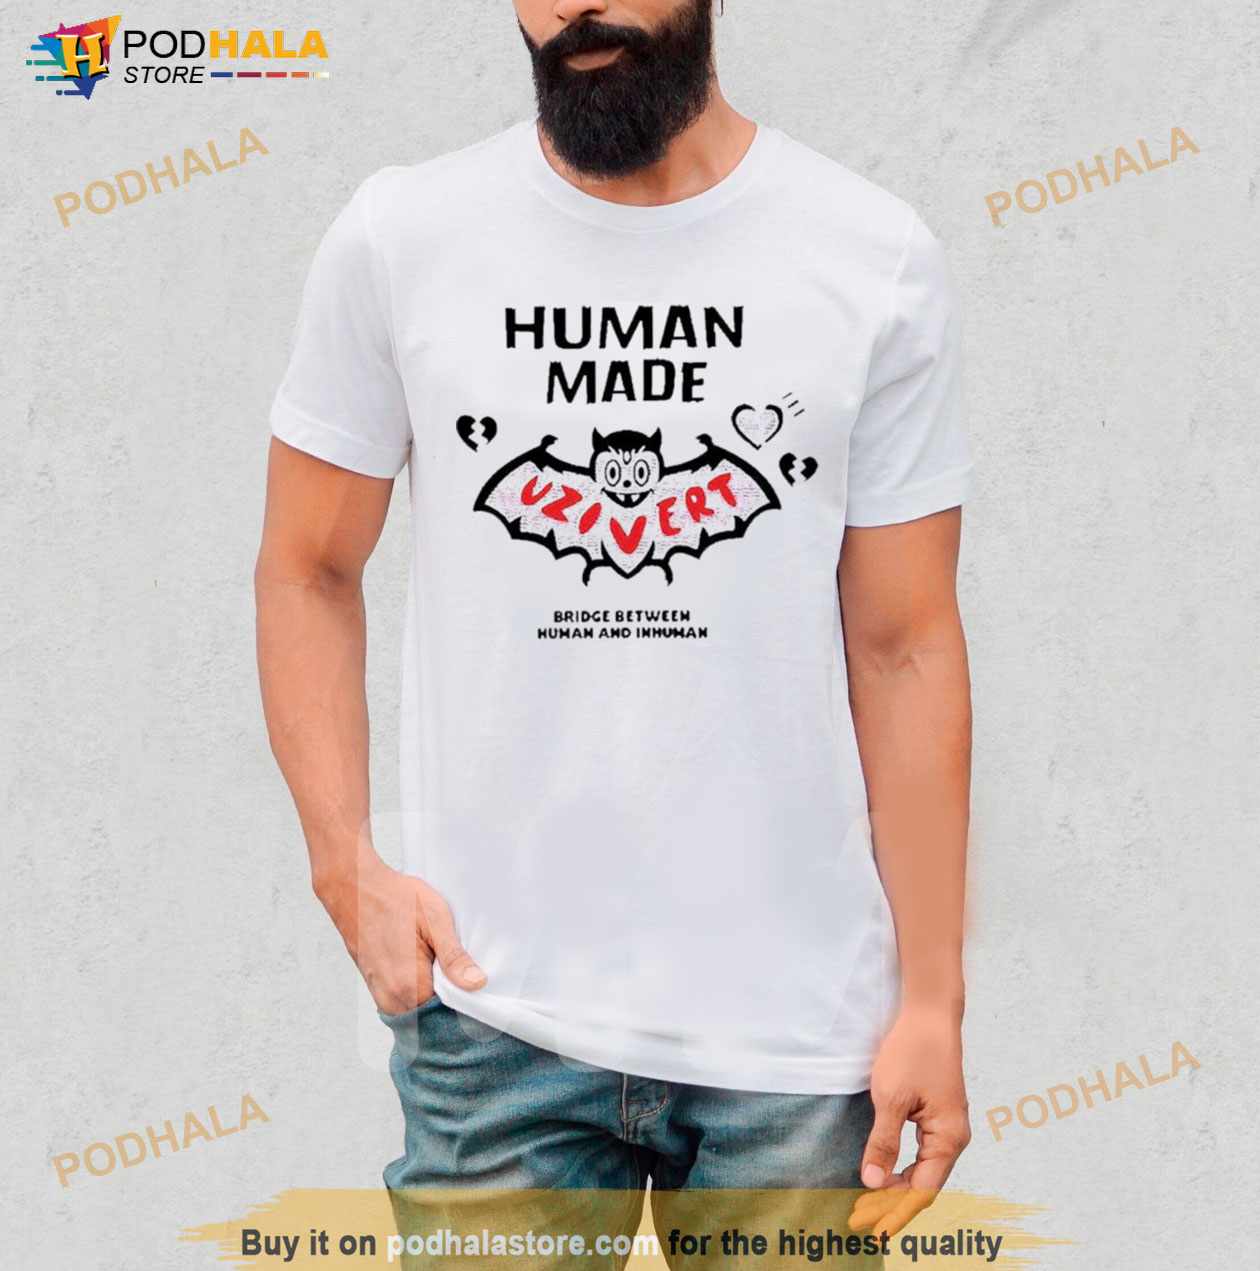 Human Made, Shirts